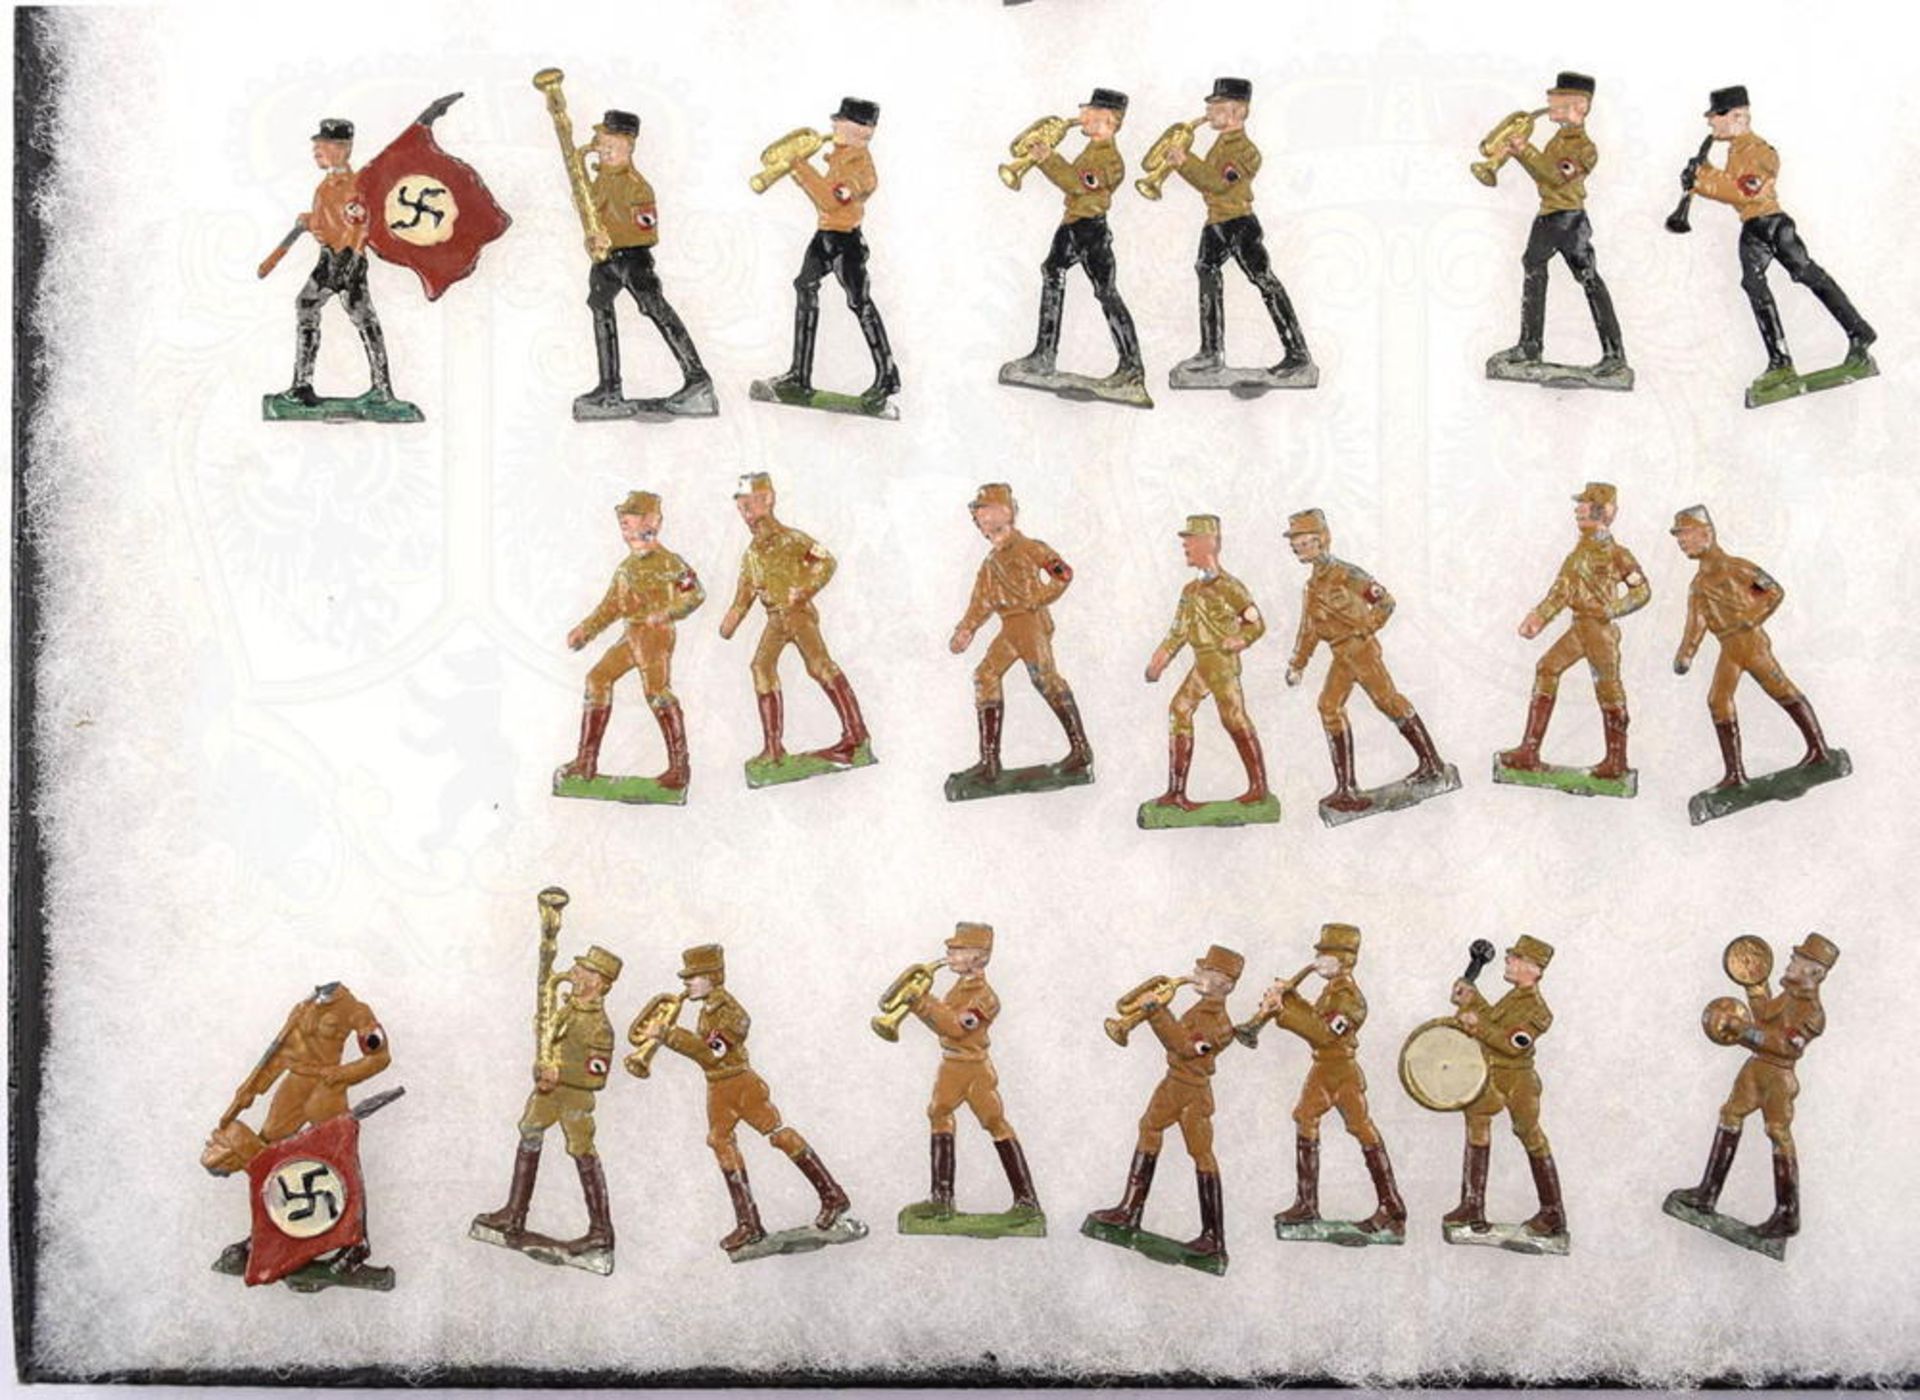 59 FLACHFIGUREN Zinn, farbig bemalt, dabei: marschierende SA-Mannschaften verschiedener Gebiete, - Image 2 of 4